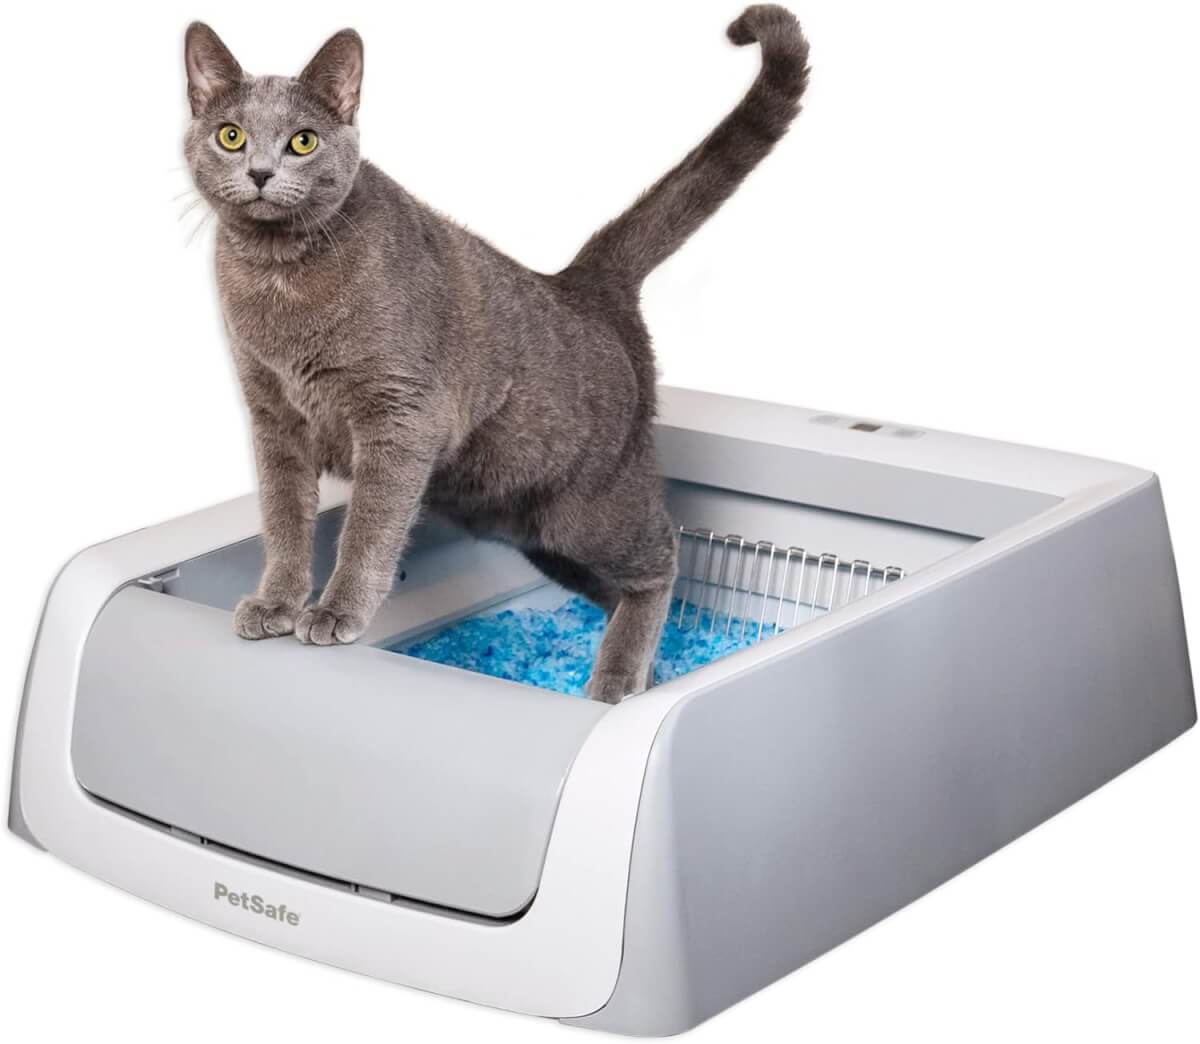 PetSafe ScoopFree Complete Smart Self-Cleaning Cat Litter Box